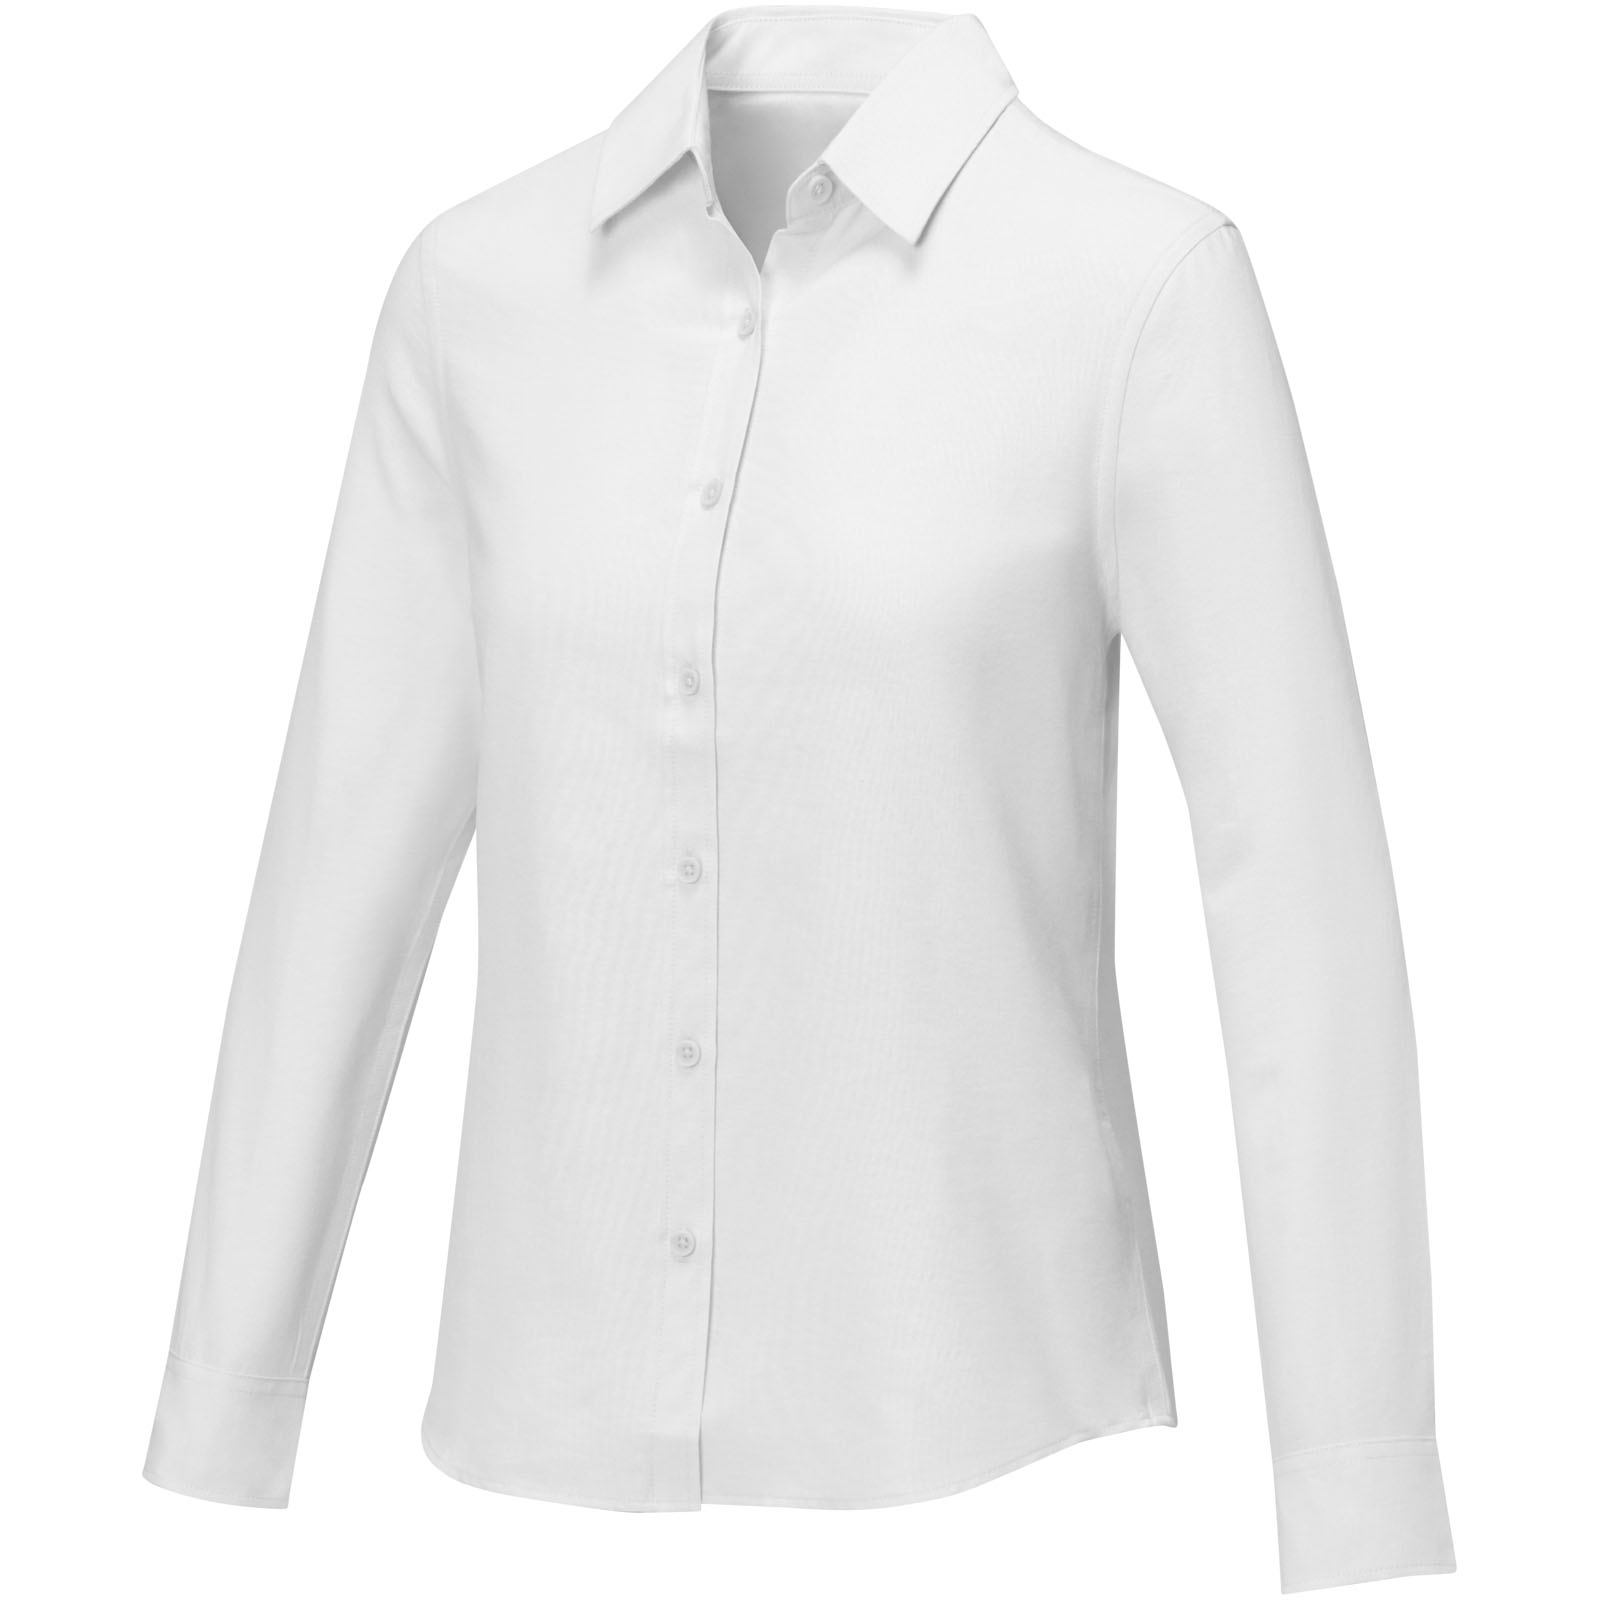 Shirts - Pollux long sleeve women's shirt